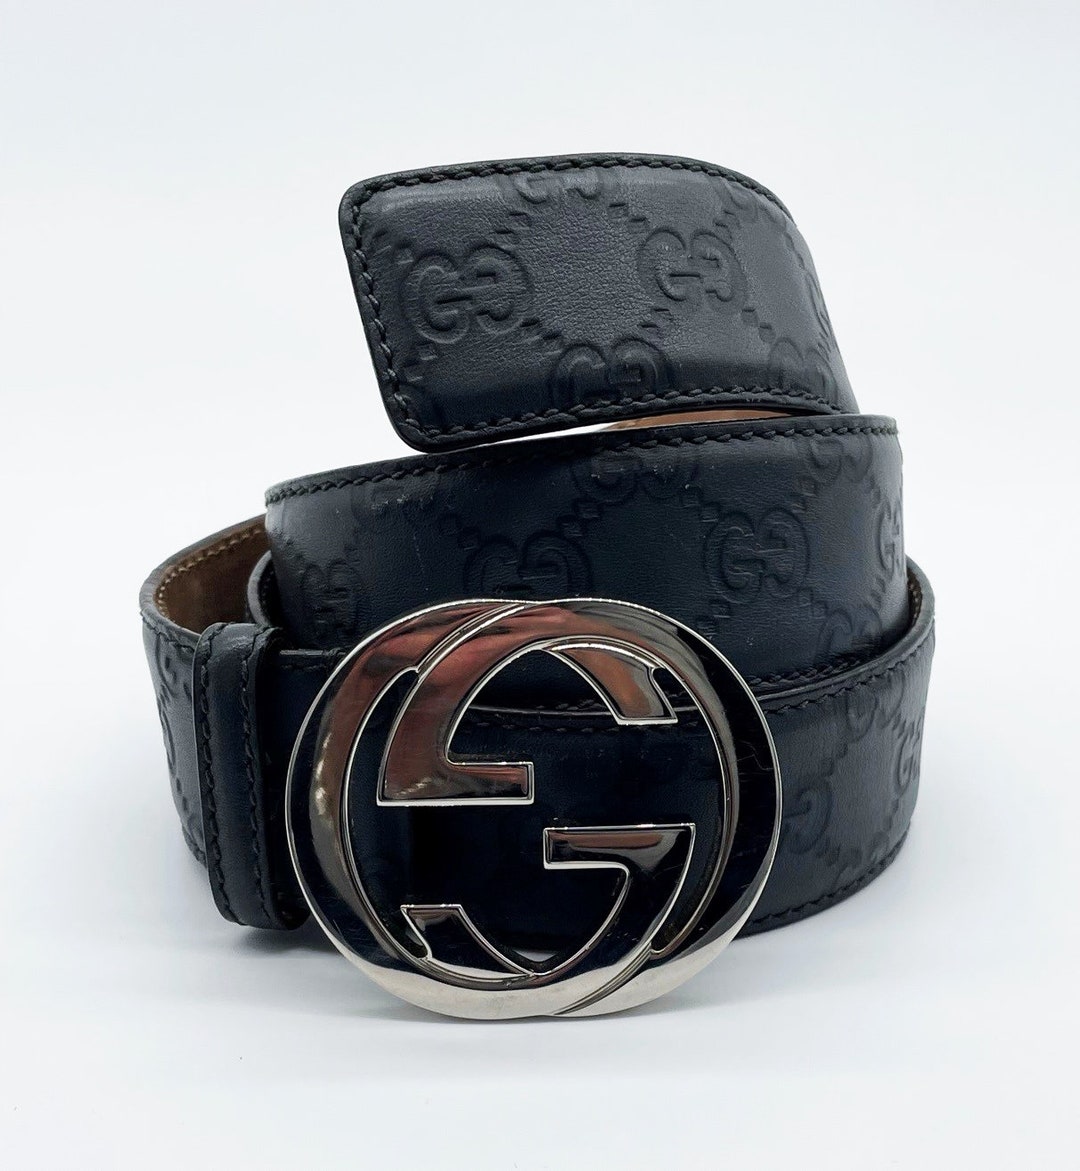 Gucci Interlocking GG Signature Leather Belt - Size 36